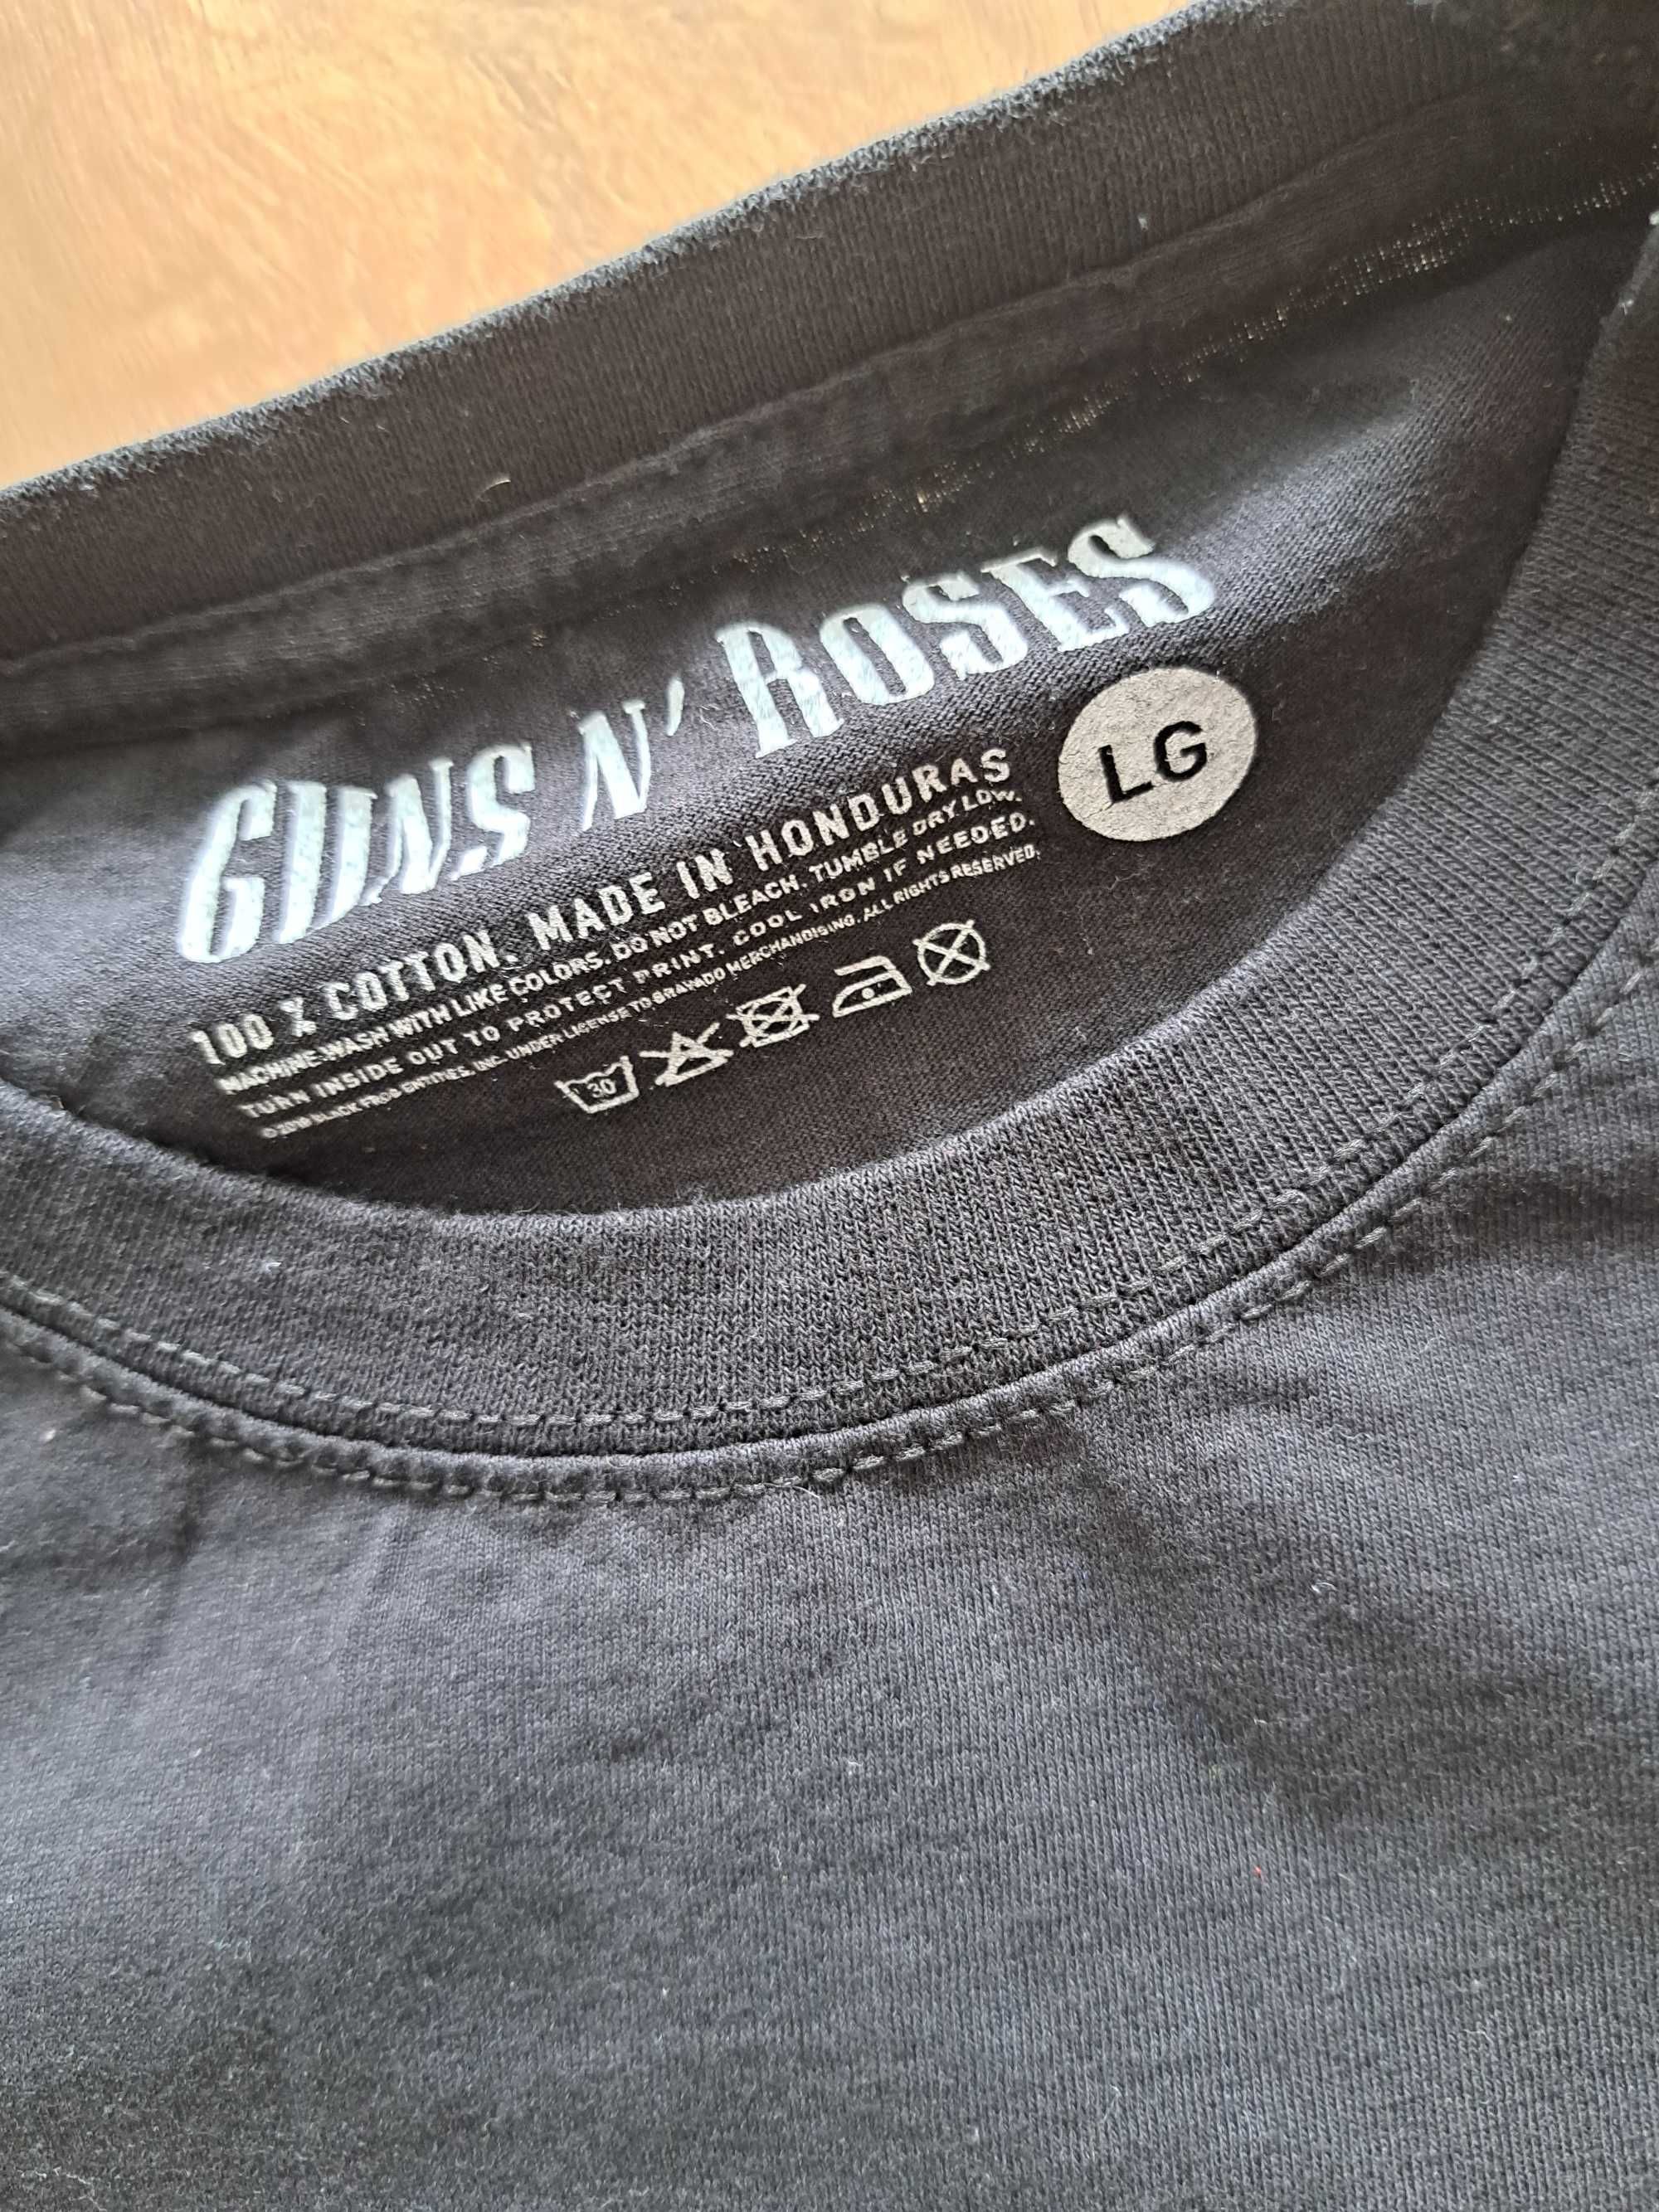 T-shirt  Guns N’ Roses st,idealny XL